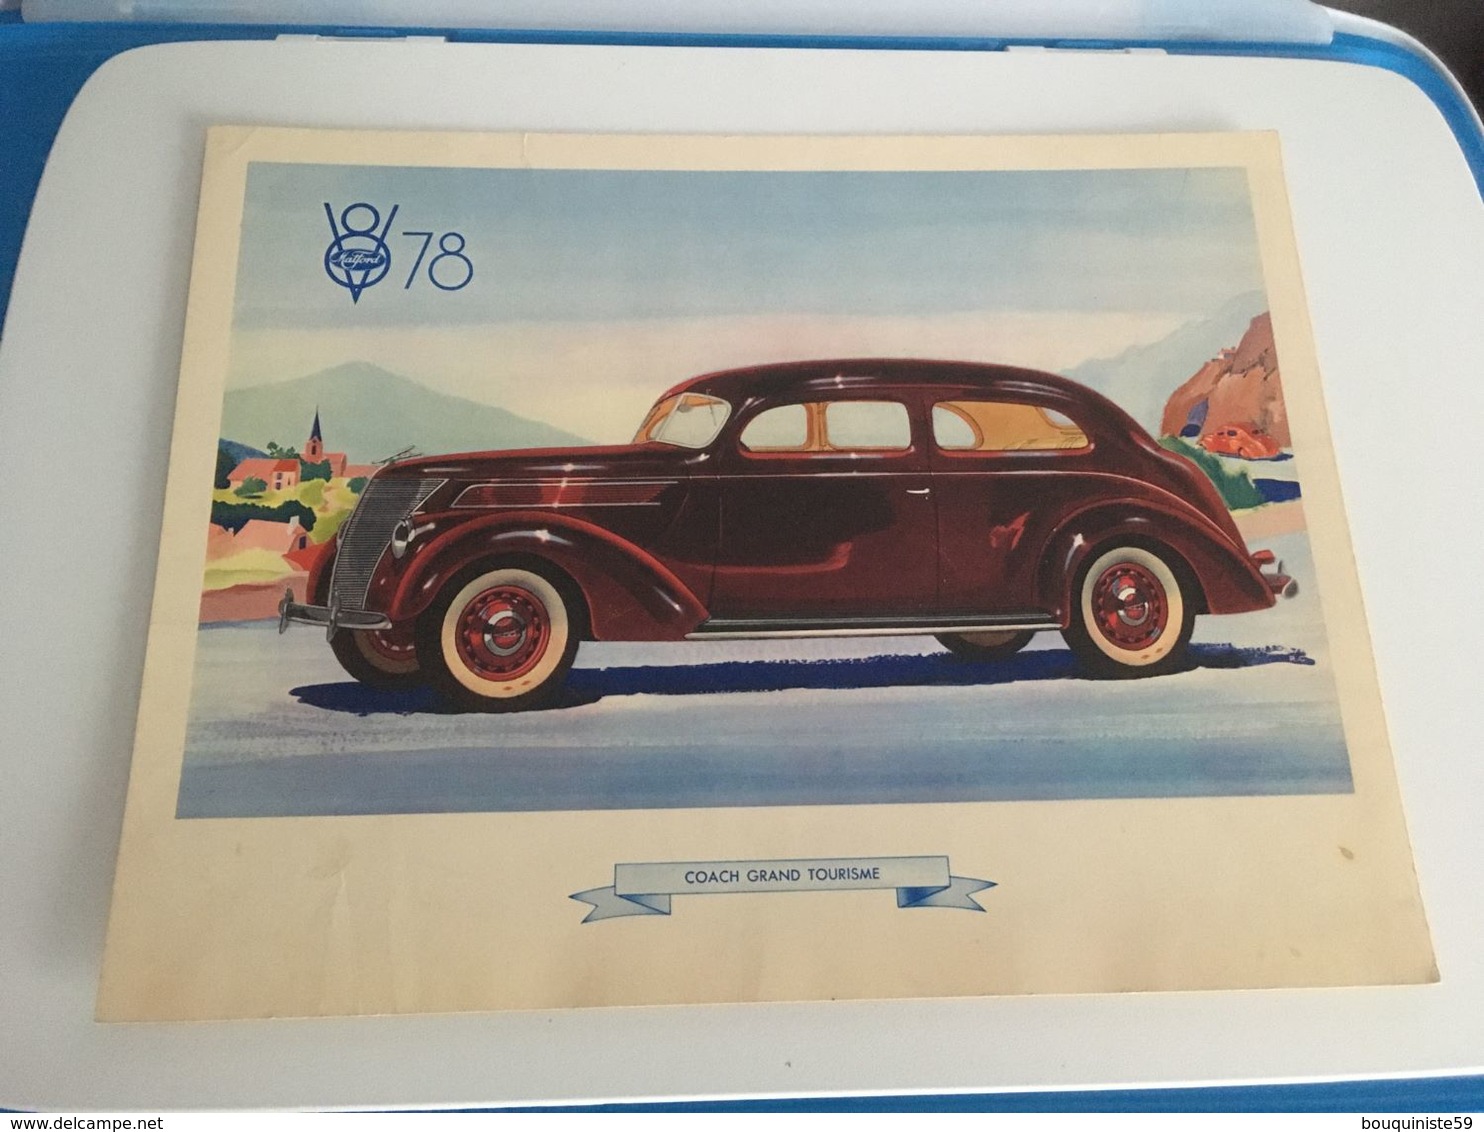 Carton Publicitaire Voiture Ford 1936  V8 78 - 1901-1940